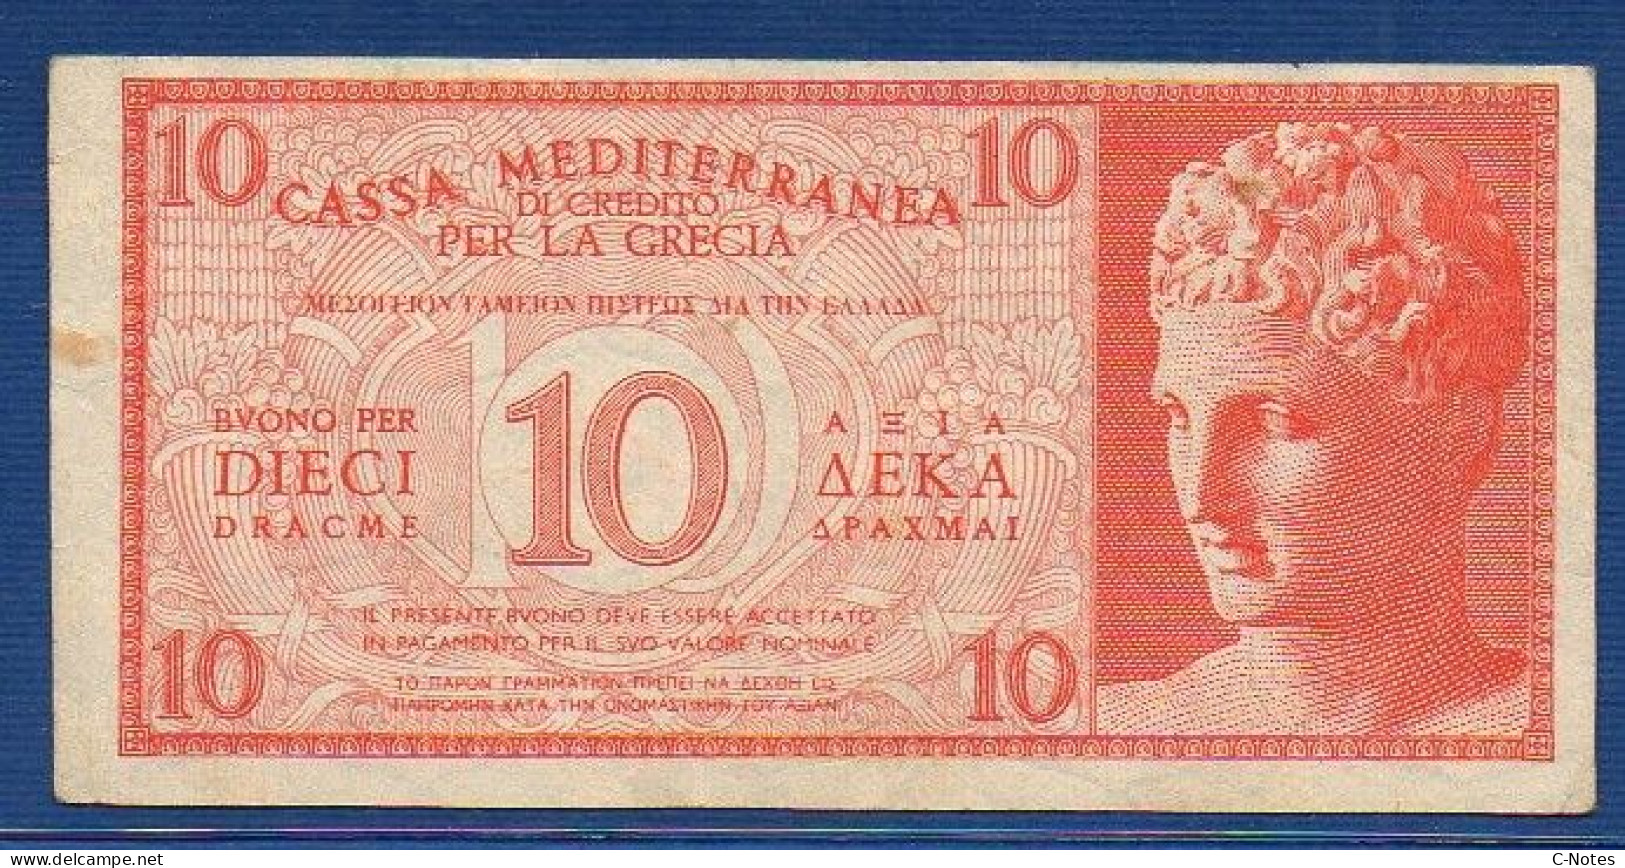 GREECE - Cassa Mediterranea Di Credito - P.M2 – 10 DRACME ND 1941 - CIRCULATED - SERIE 0002 636716 - Italian Occupation (Aegean)